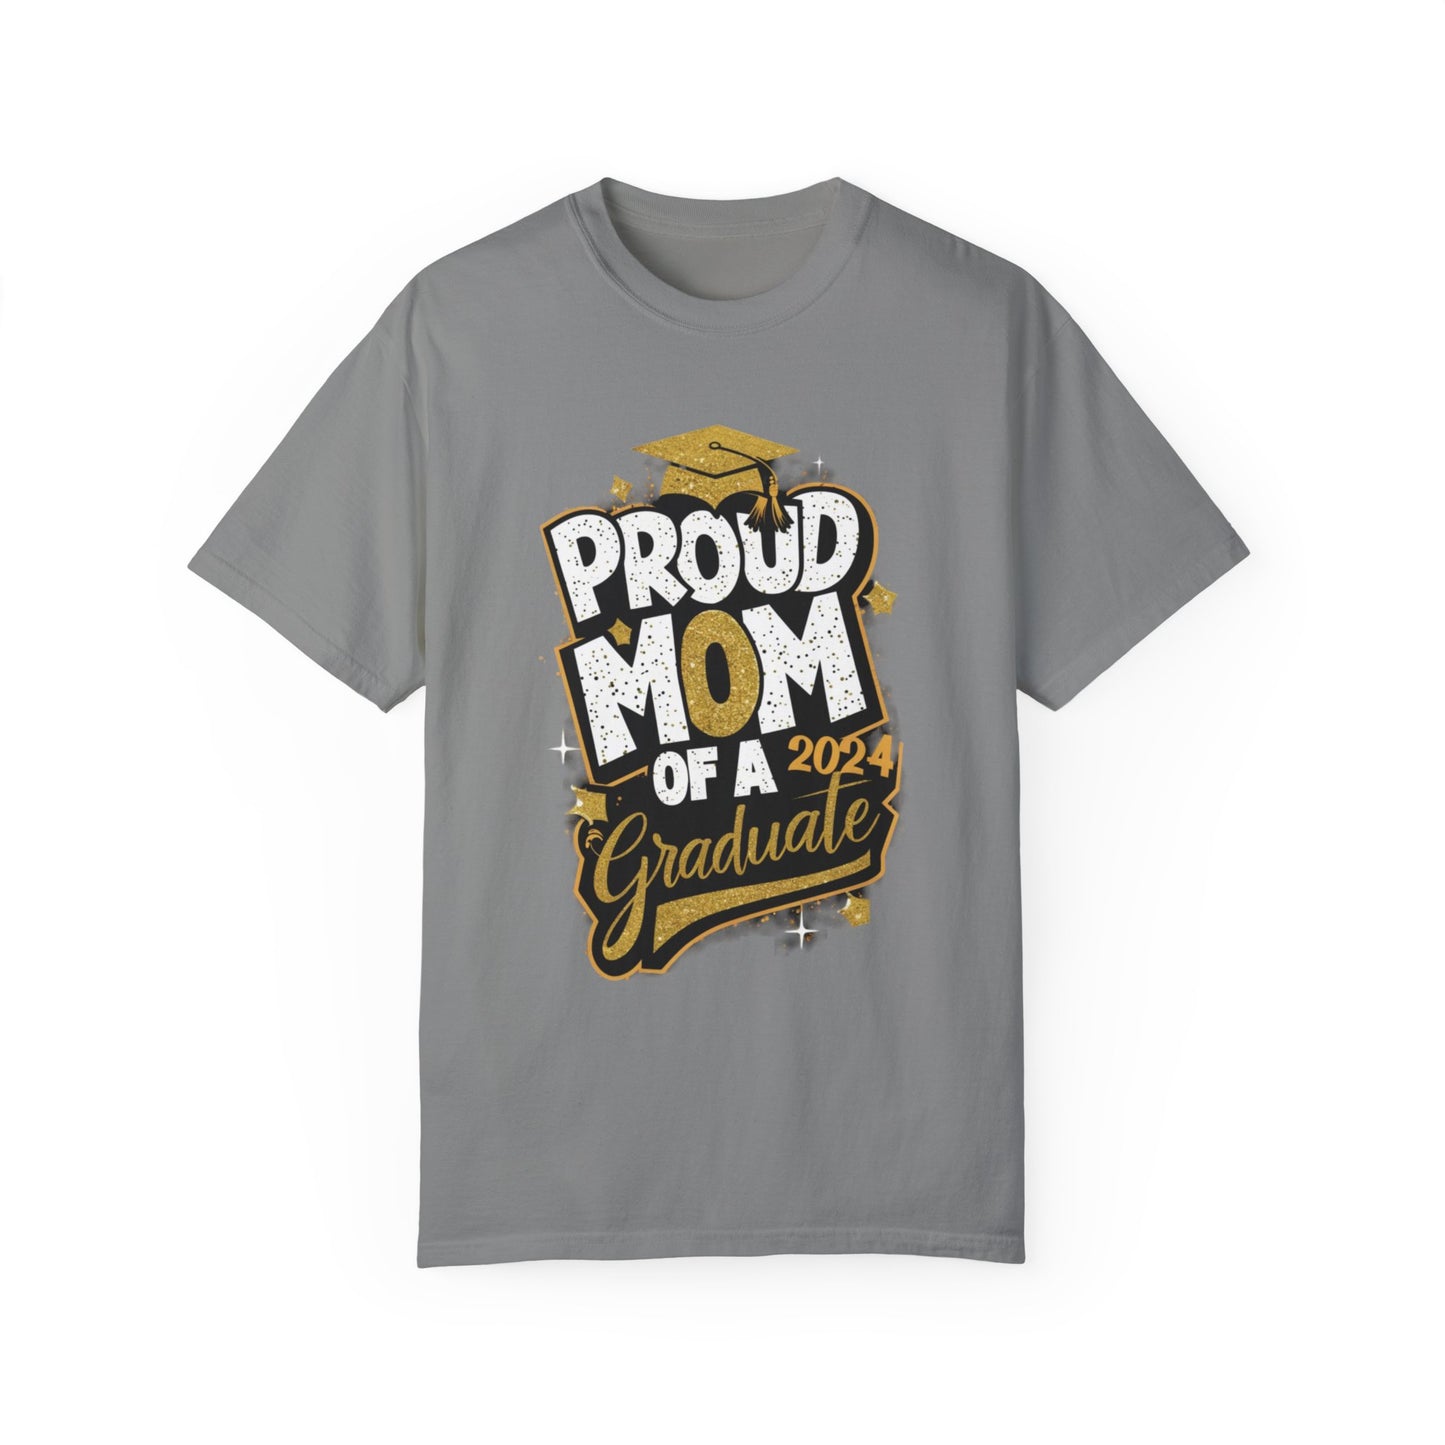 Proud Mom of a 2024 Graduate Unisex Garment-dyed T-shirt Cotton Funny Humorous Graphic Soft Premium Unisex Men Women Granite T-shirt Birthday Gift-4